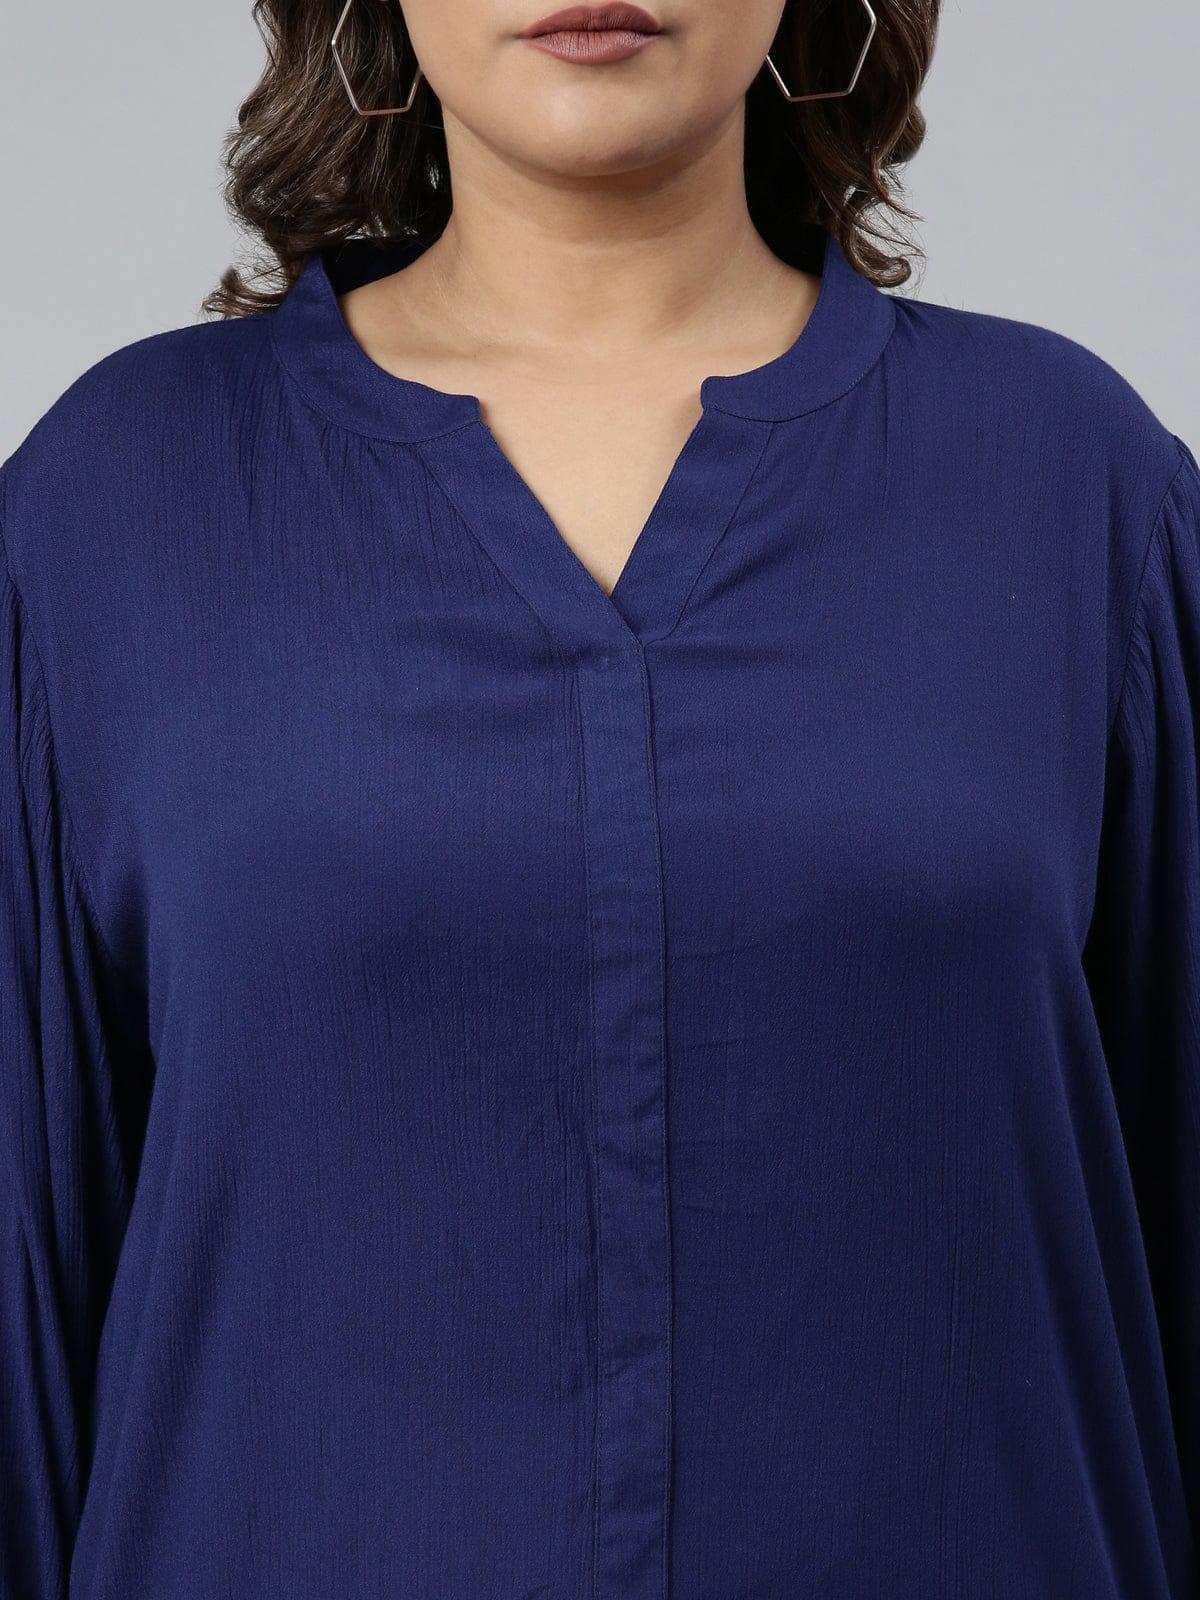 buy  women's blue shirt  online by theShaili upto 50% off